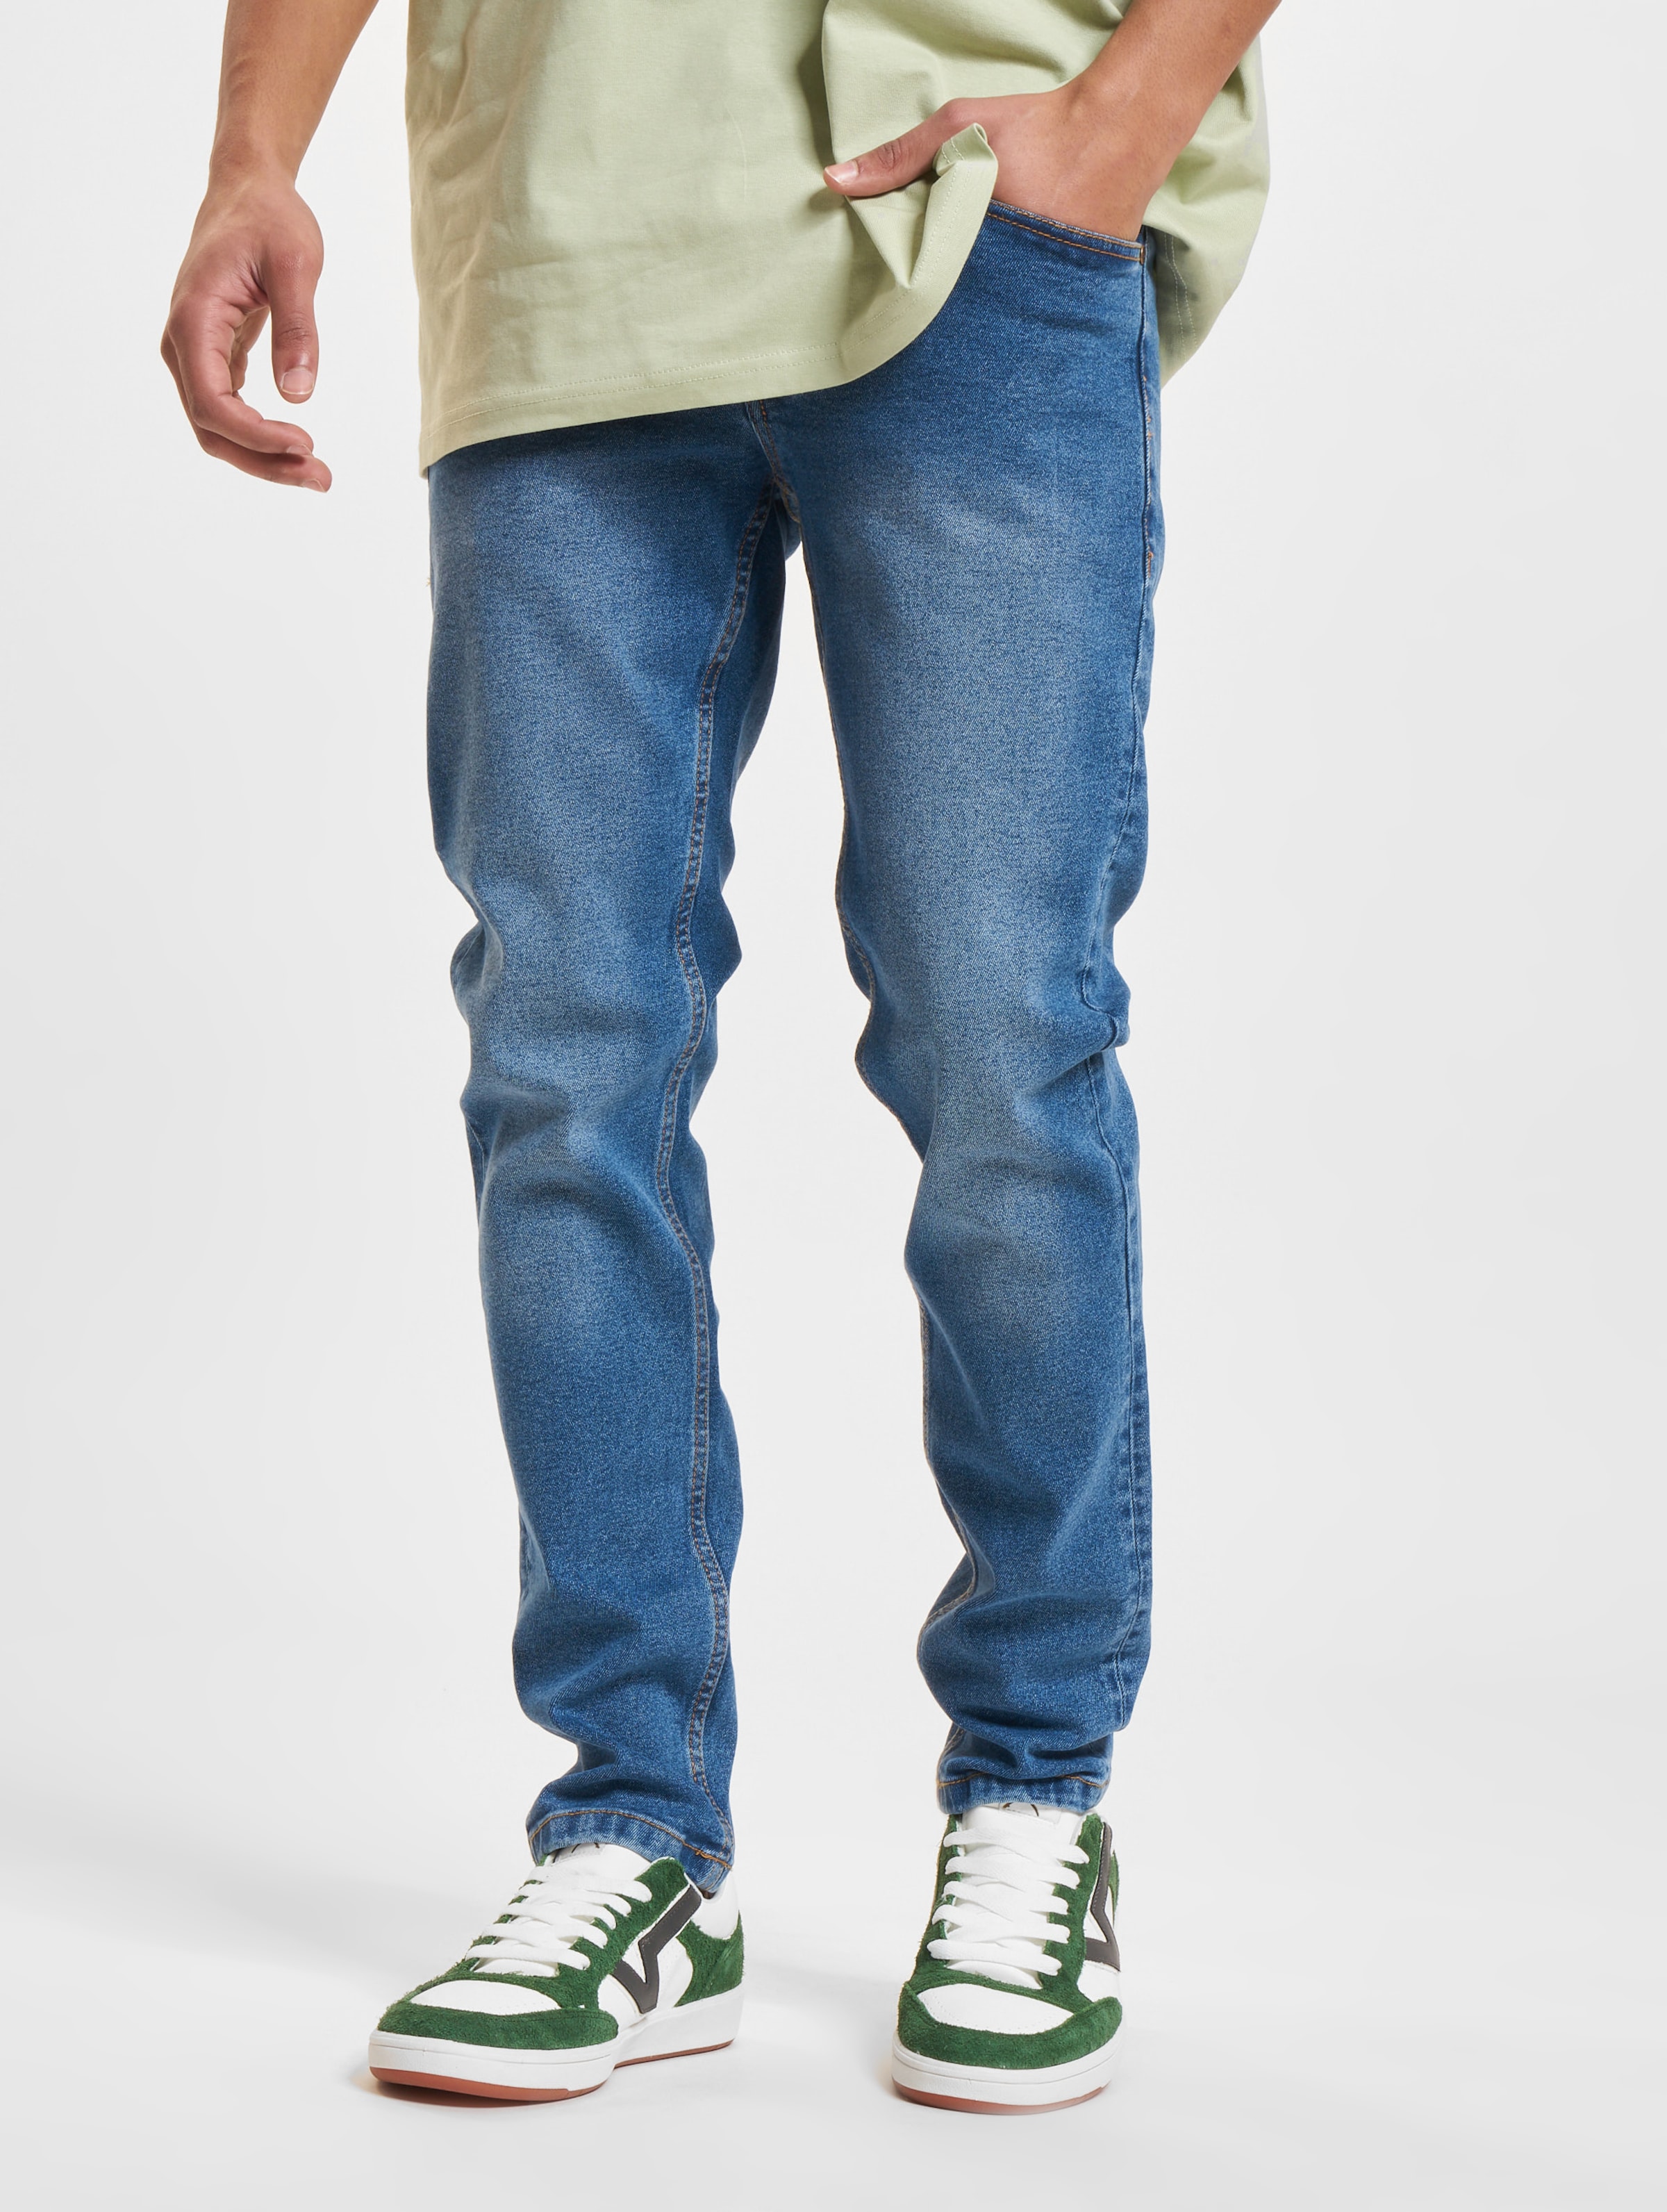 Denim Project Mr. Red Skinny Fit Jeans Mannen op kleur blauw, Maat 3234